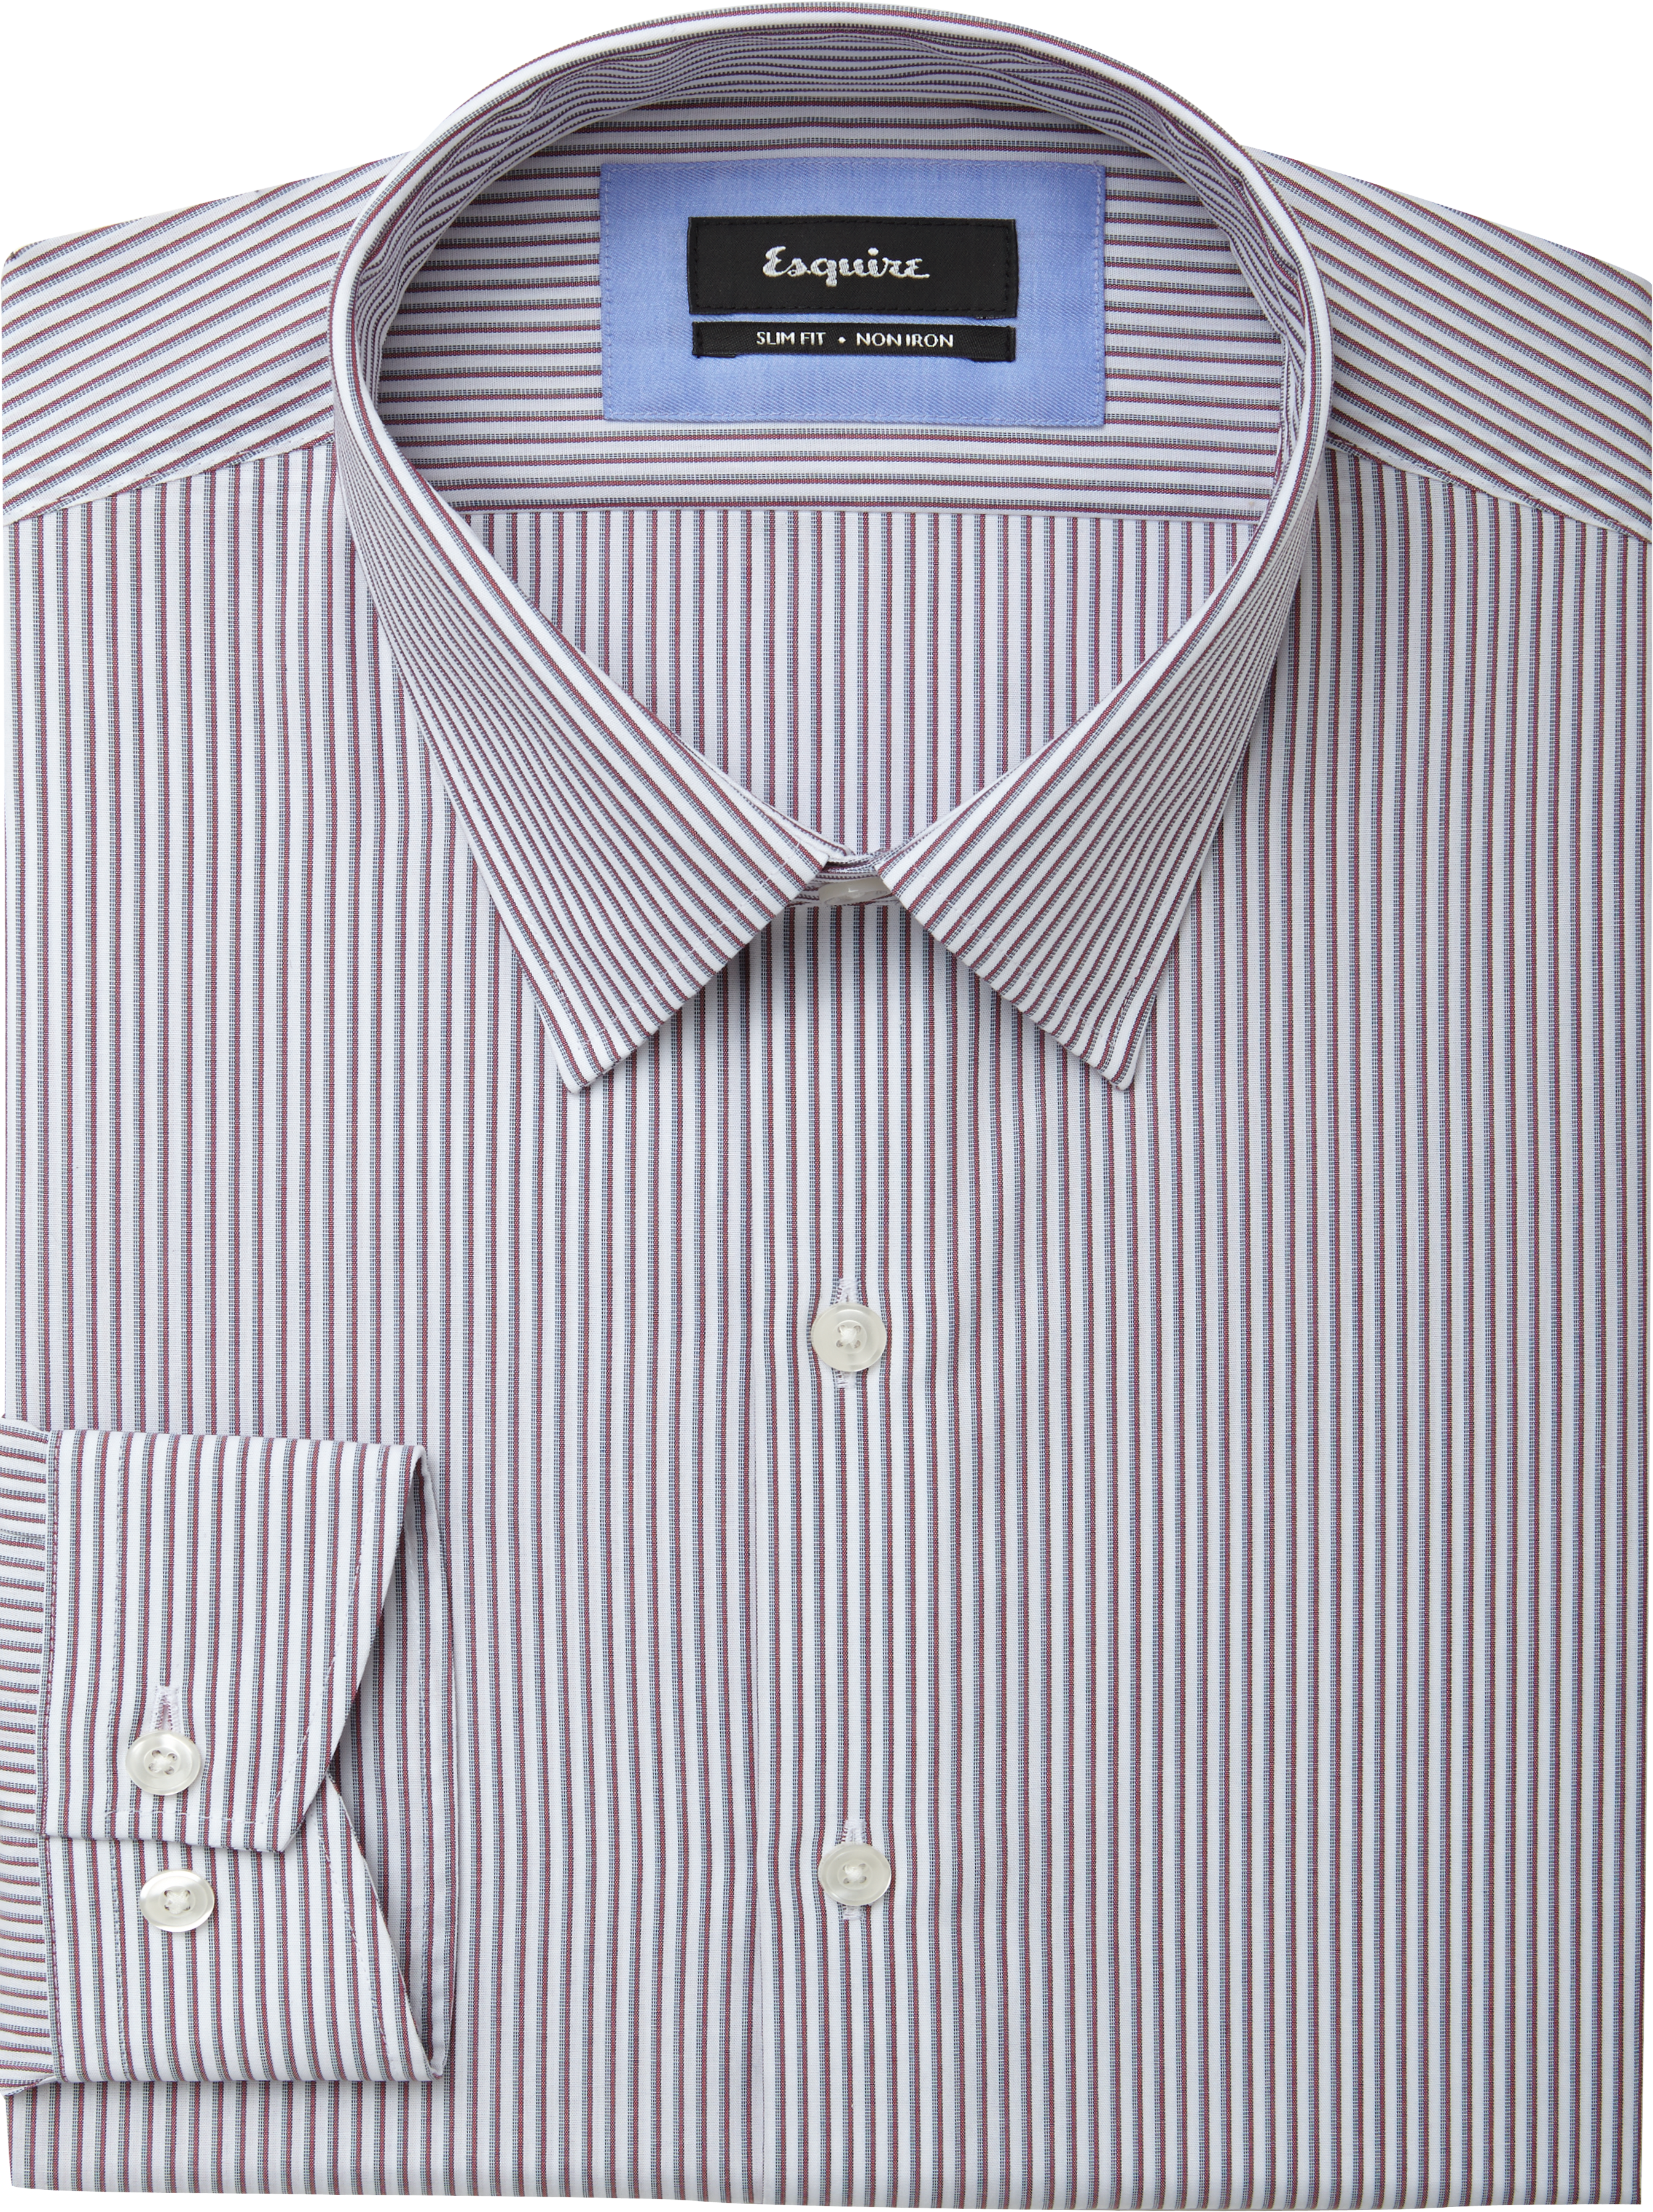 Esquire Burgundy Stripe Slim Fit Non-Iron Dress Shirt - Men's Shirts ...